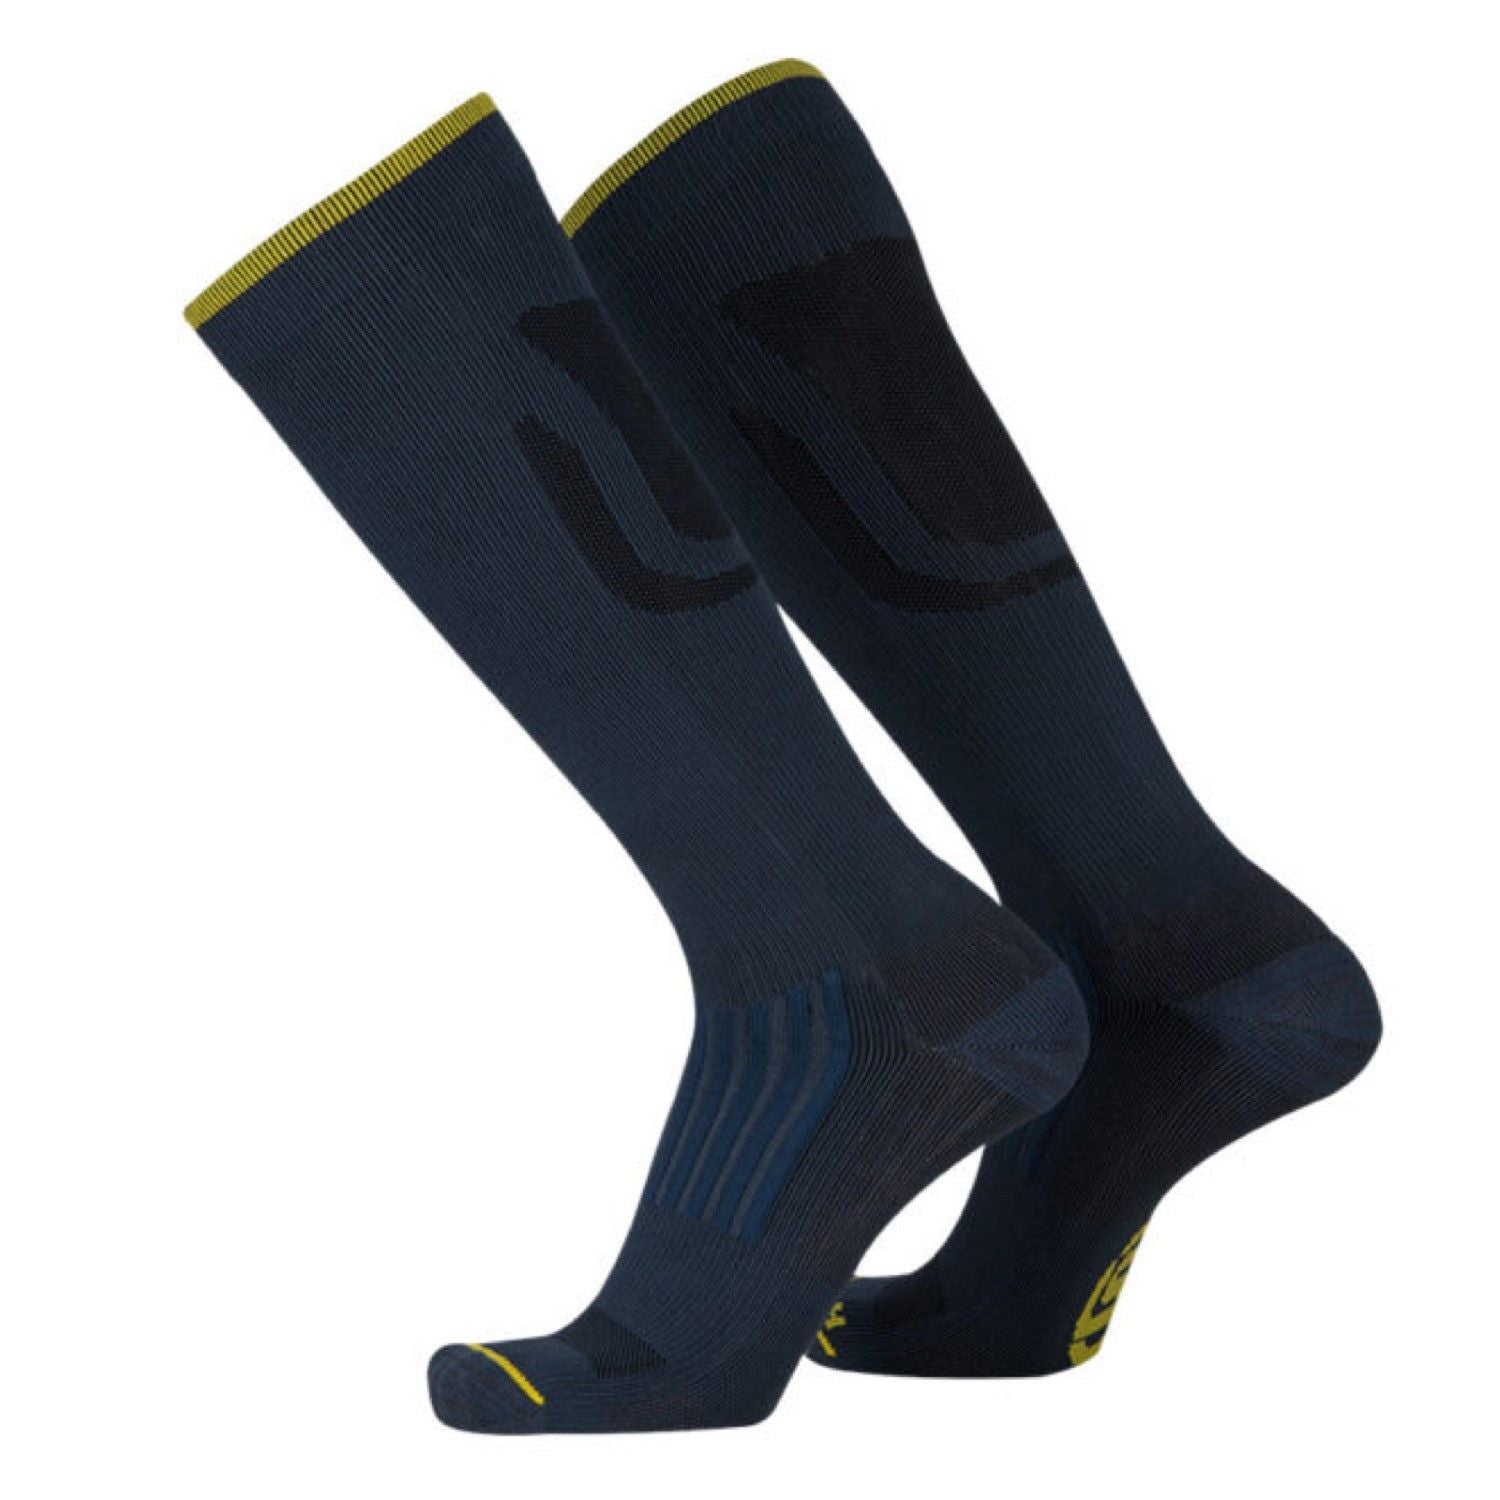 SKINS Unisex Series-3 Travel Socks - Navy